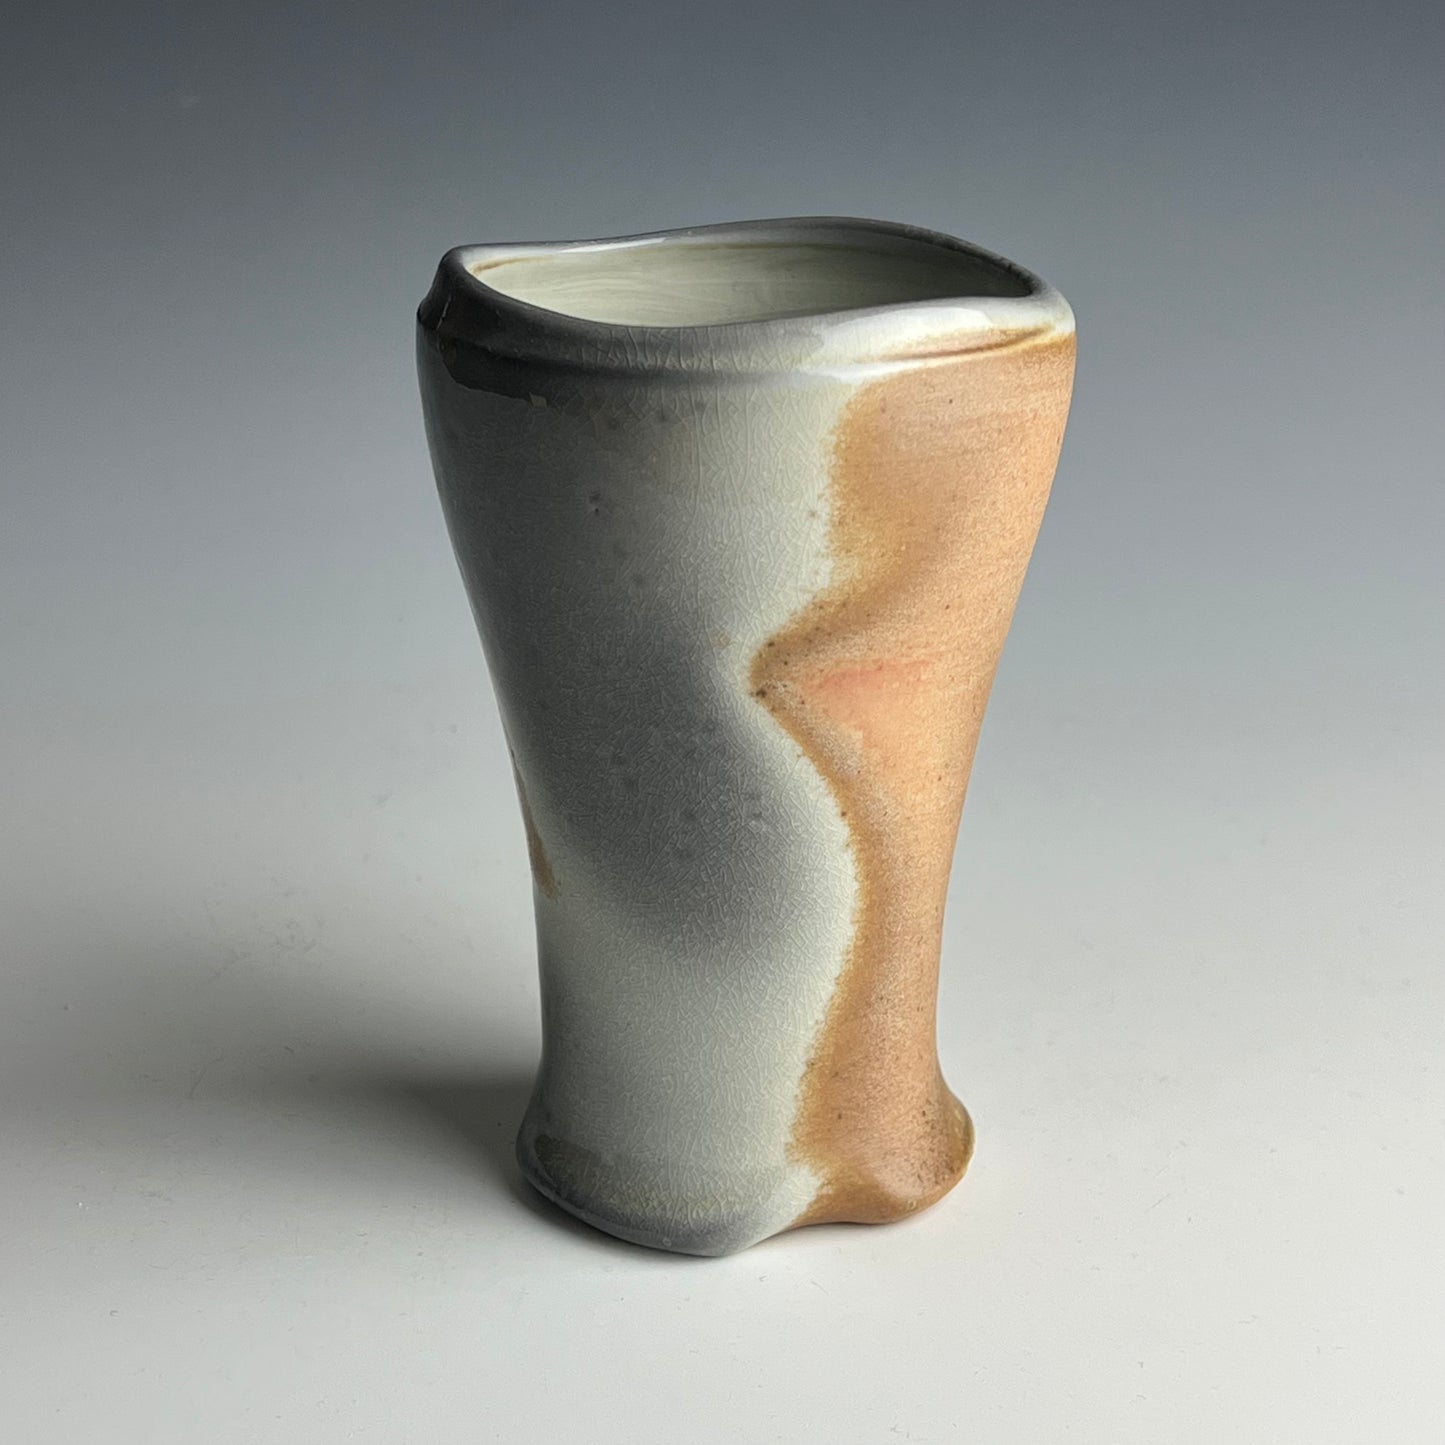 Porcelain tumbler decorated by a mug